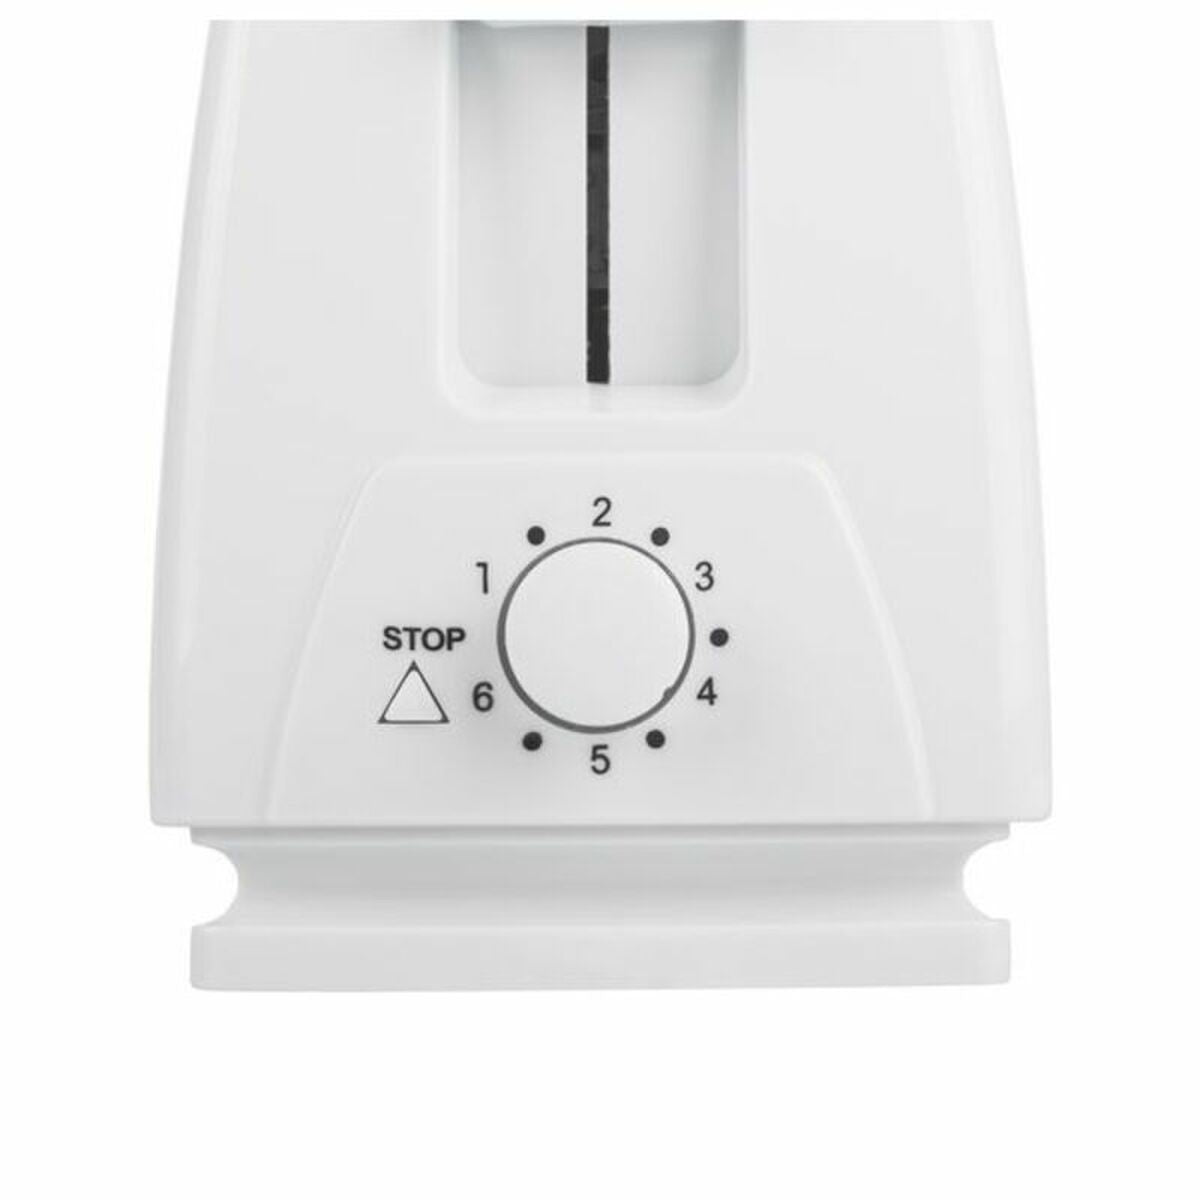 Toaster Tristar BR-1009 600 W